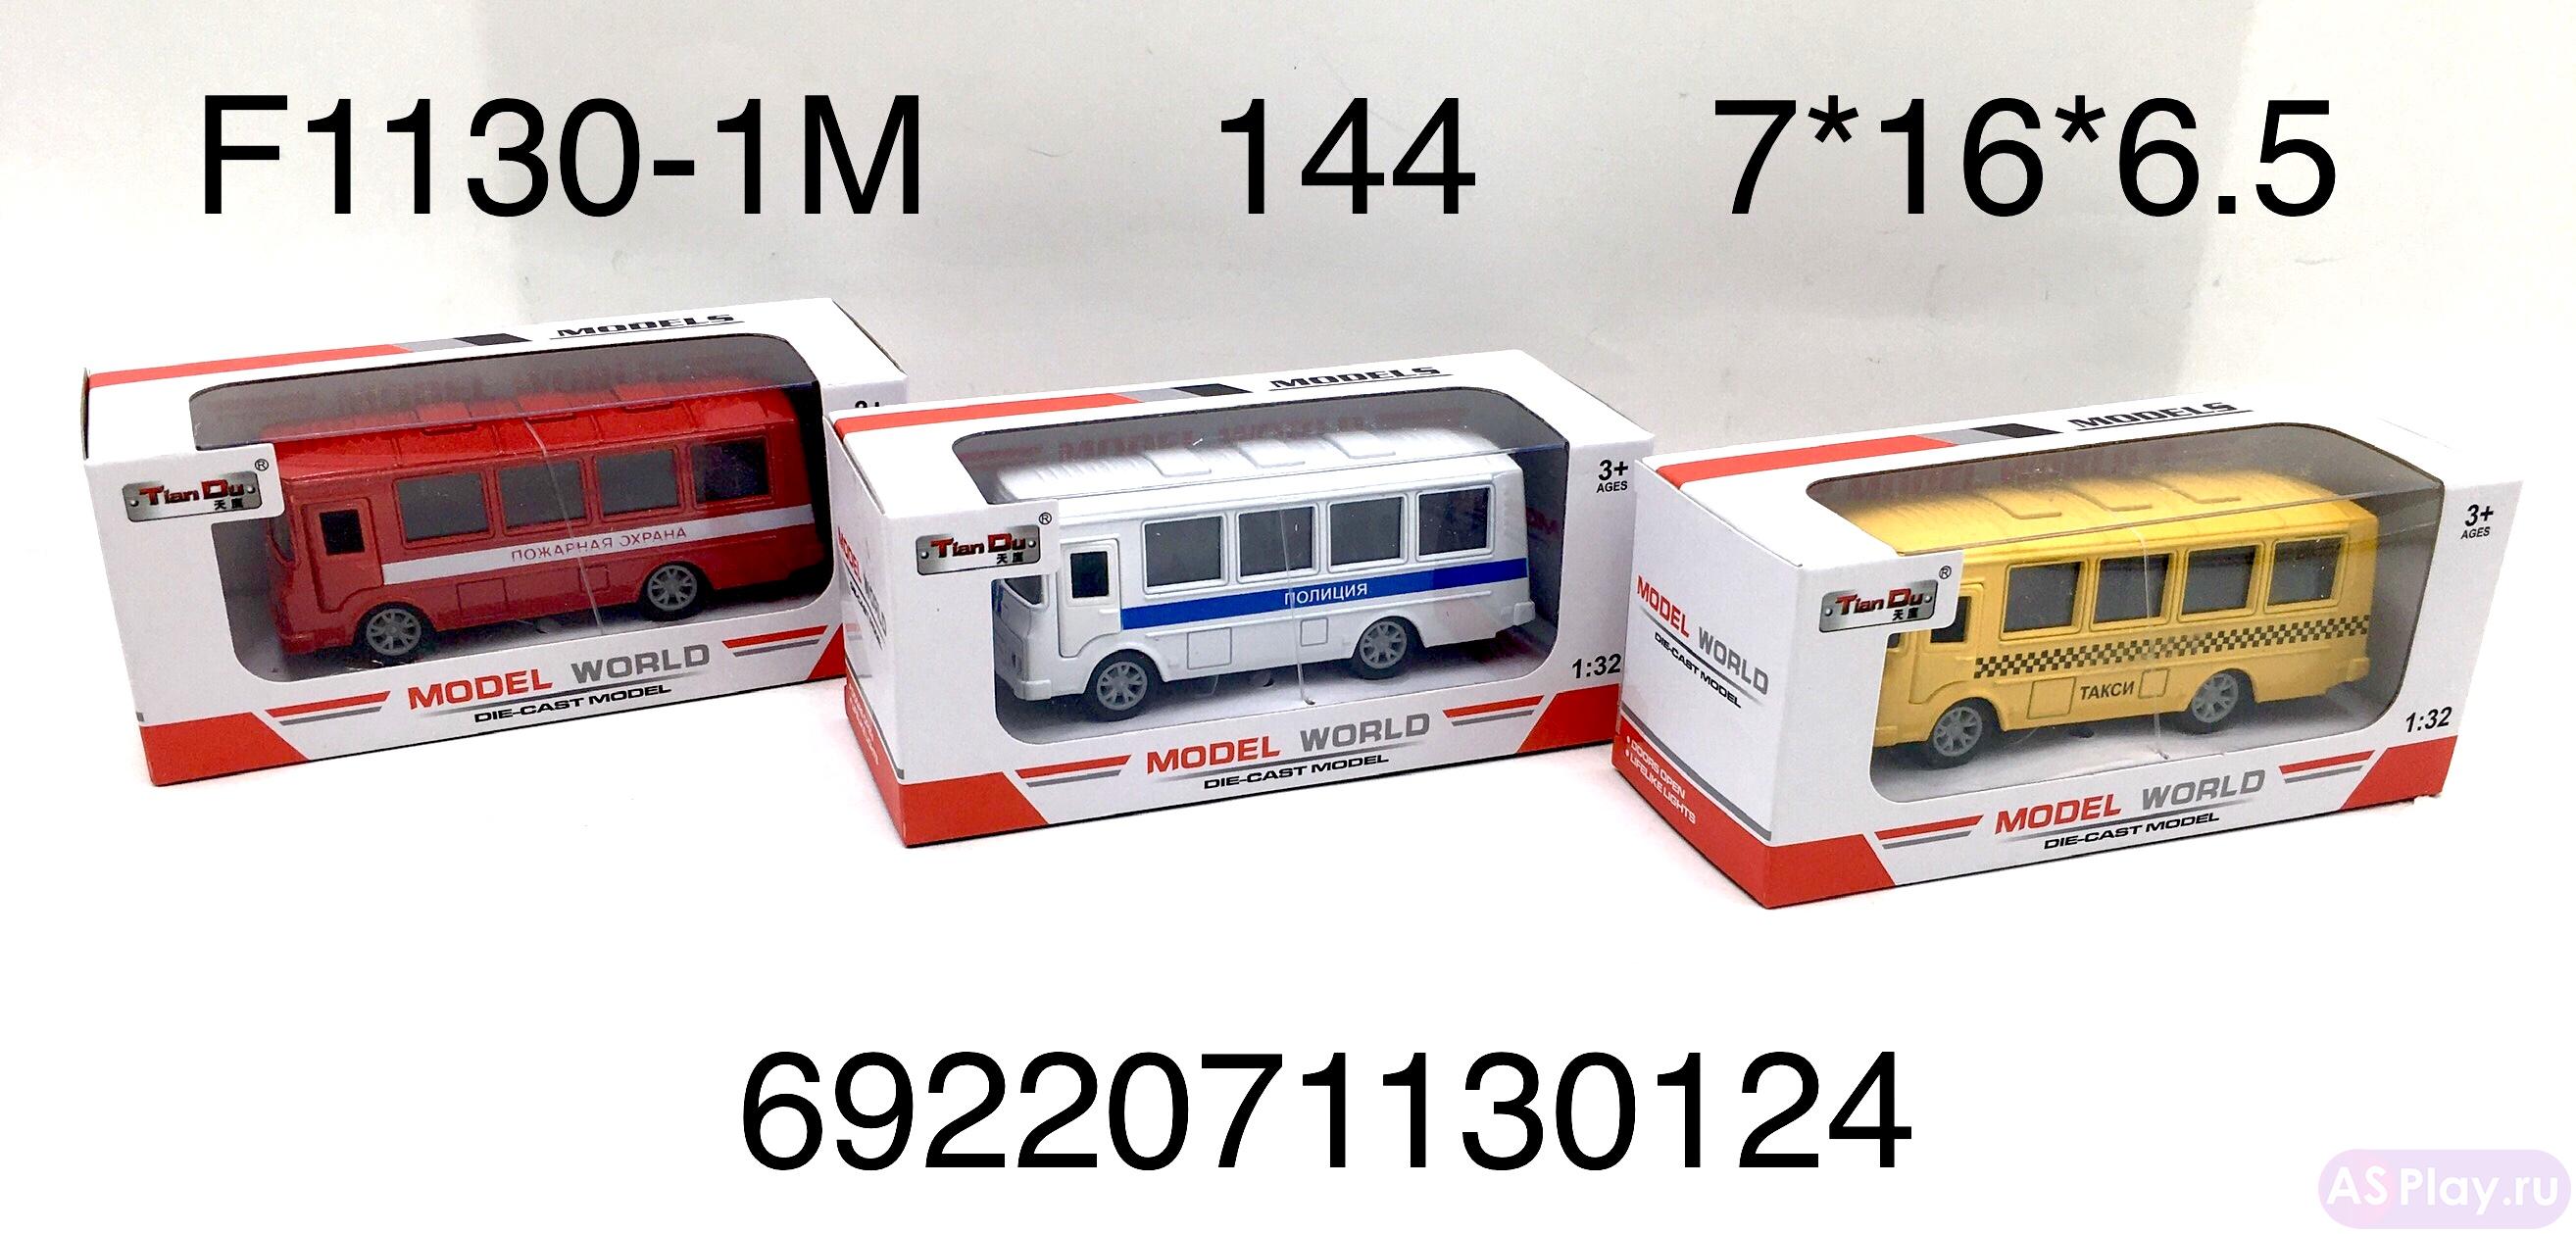 F1130-1M Автобусы модельки, 144 шт. в кор. F1130-1M